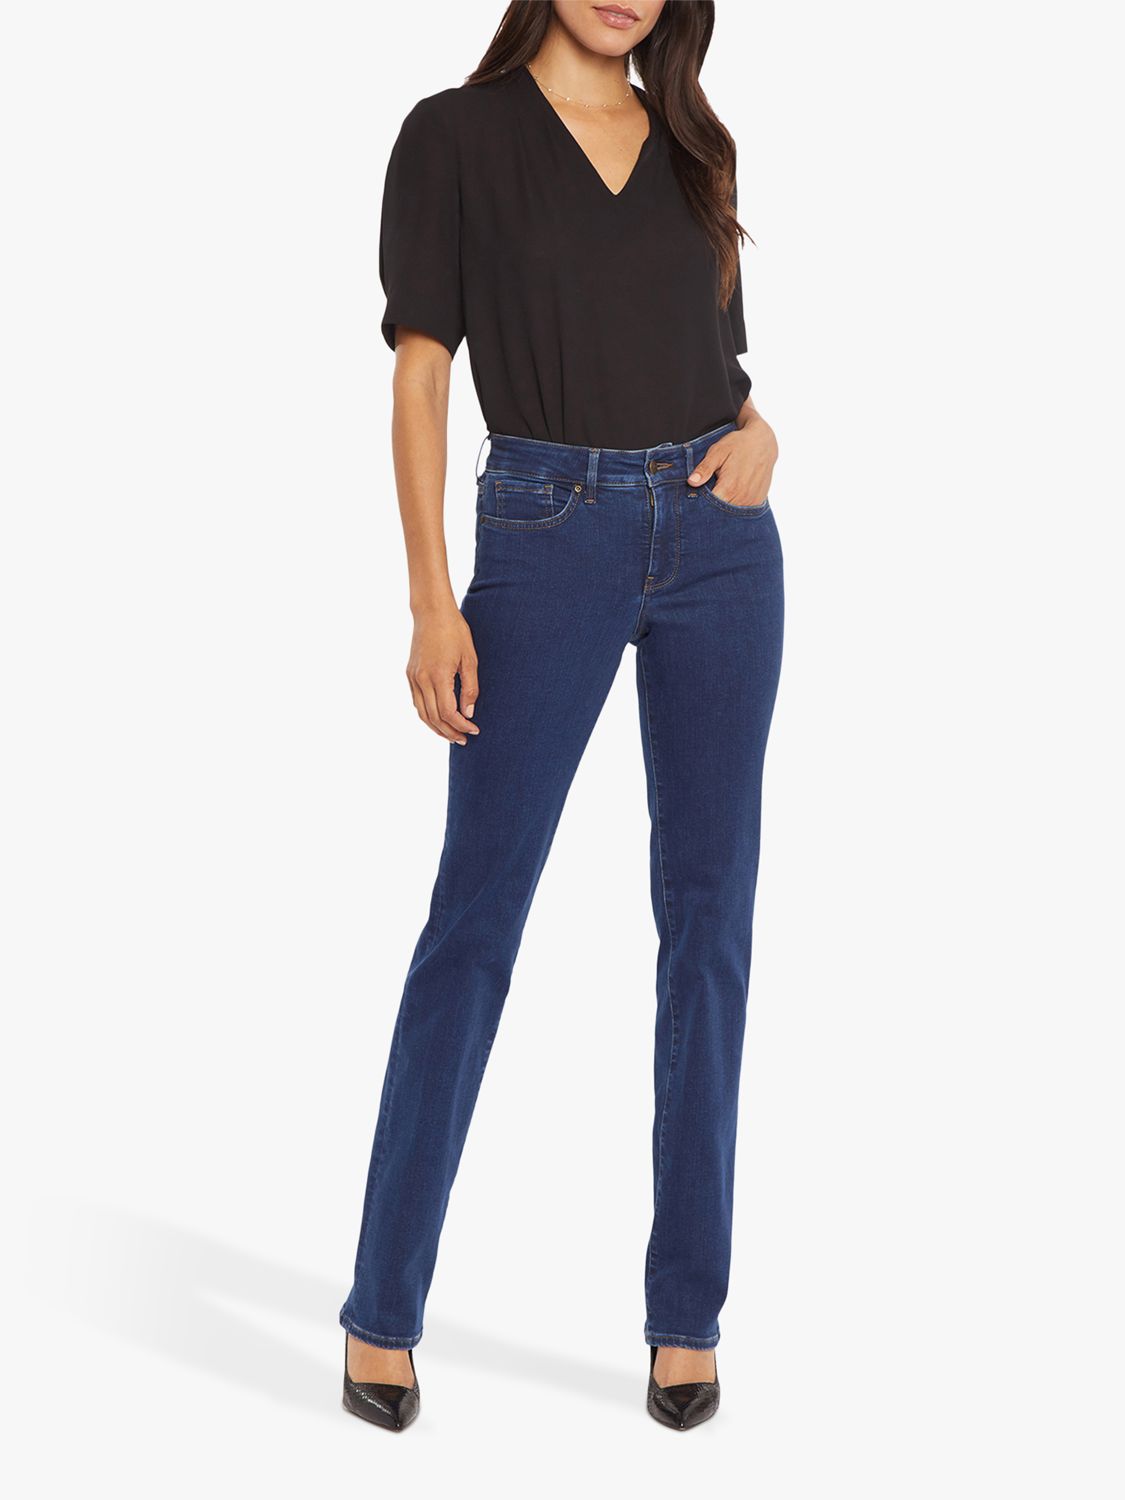 Chloe Capri Jeans With Side Slits - Quinta Blue | NYDJ